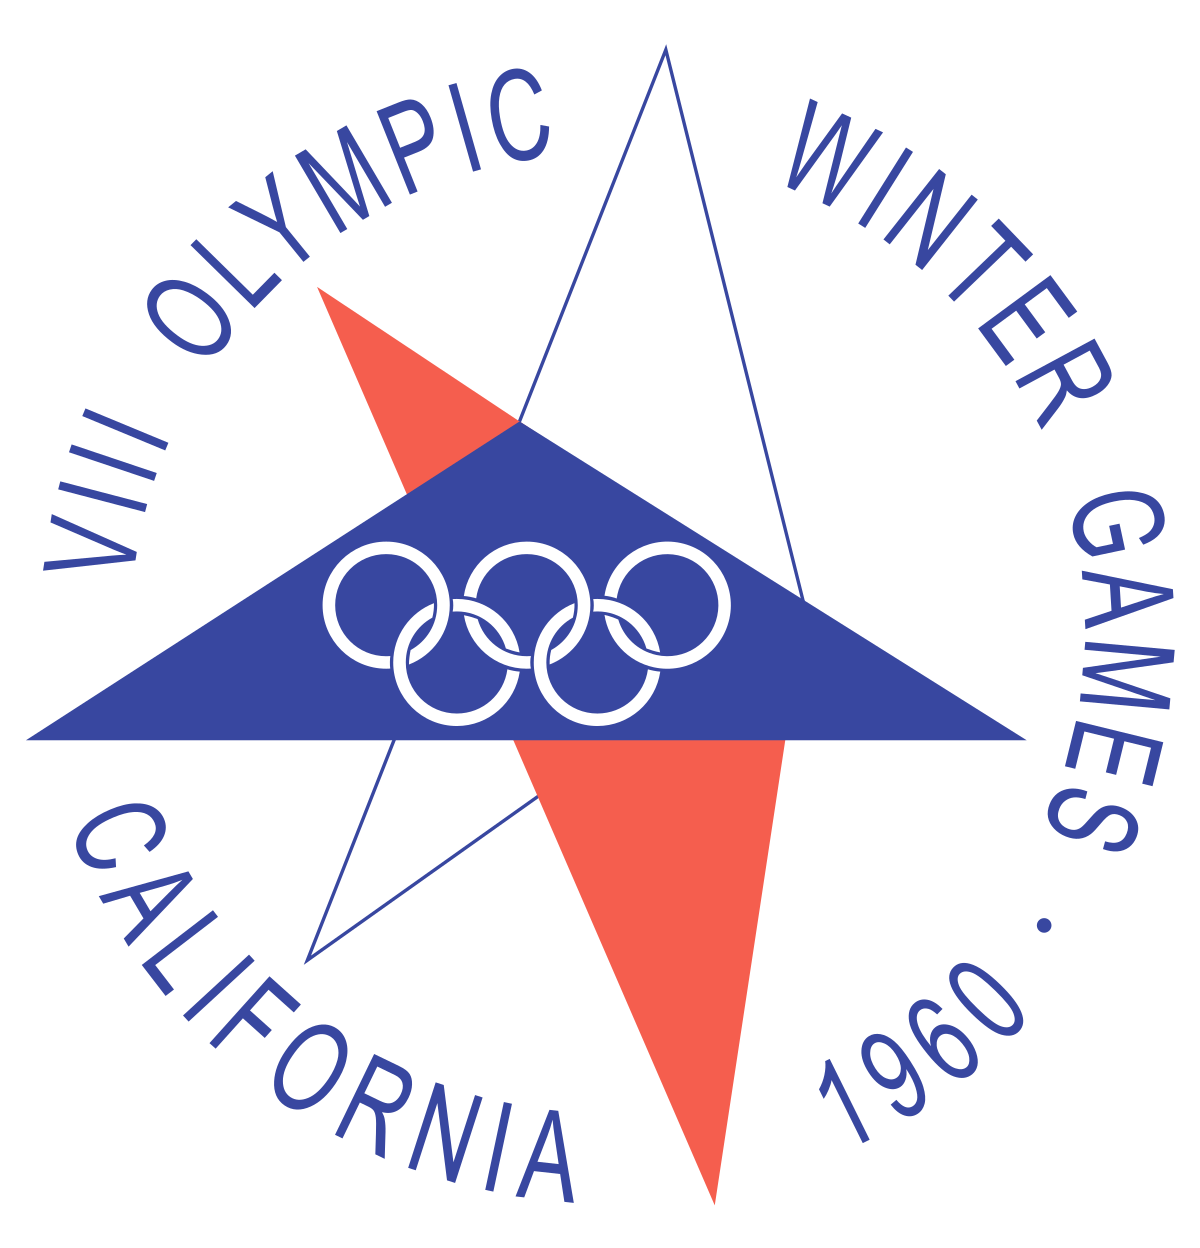 1960 Winter Olympics - Wikipedia